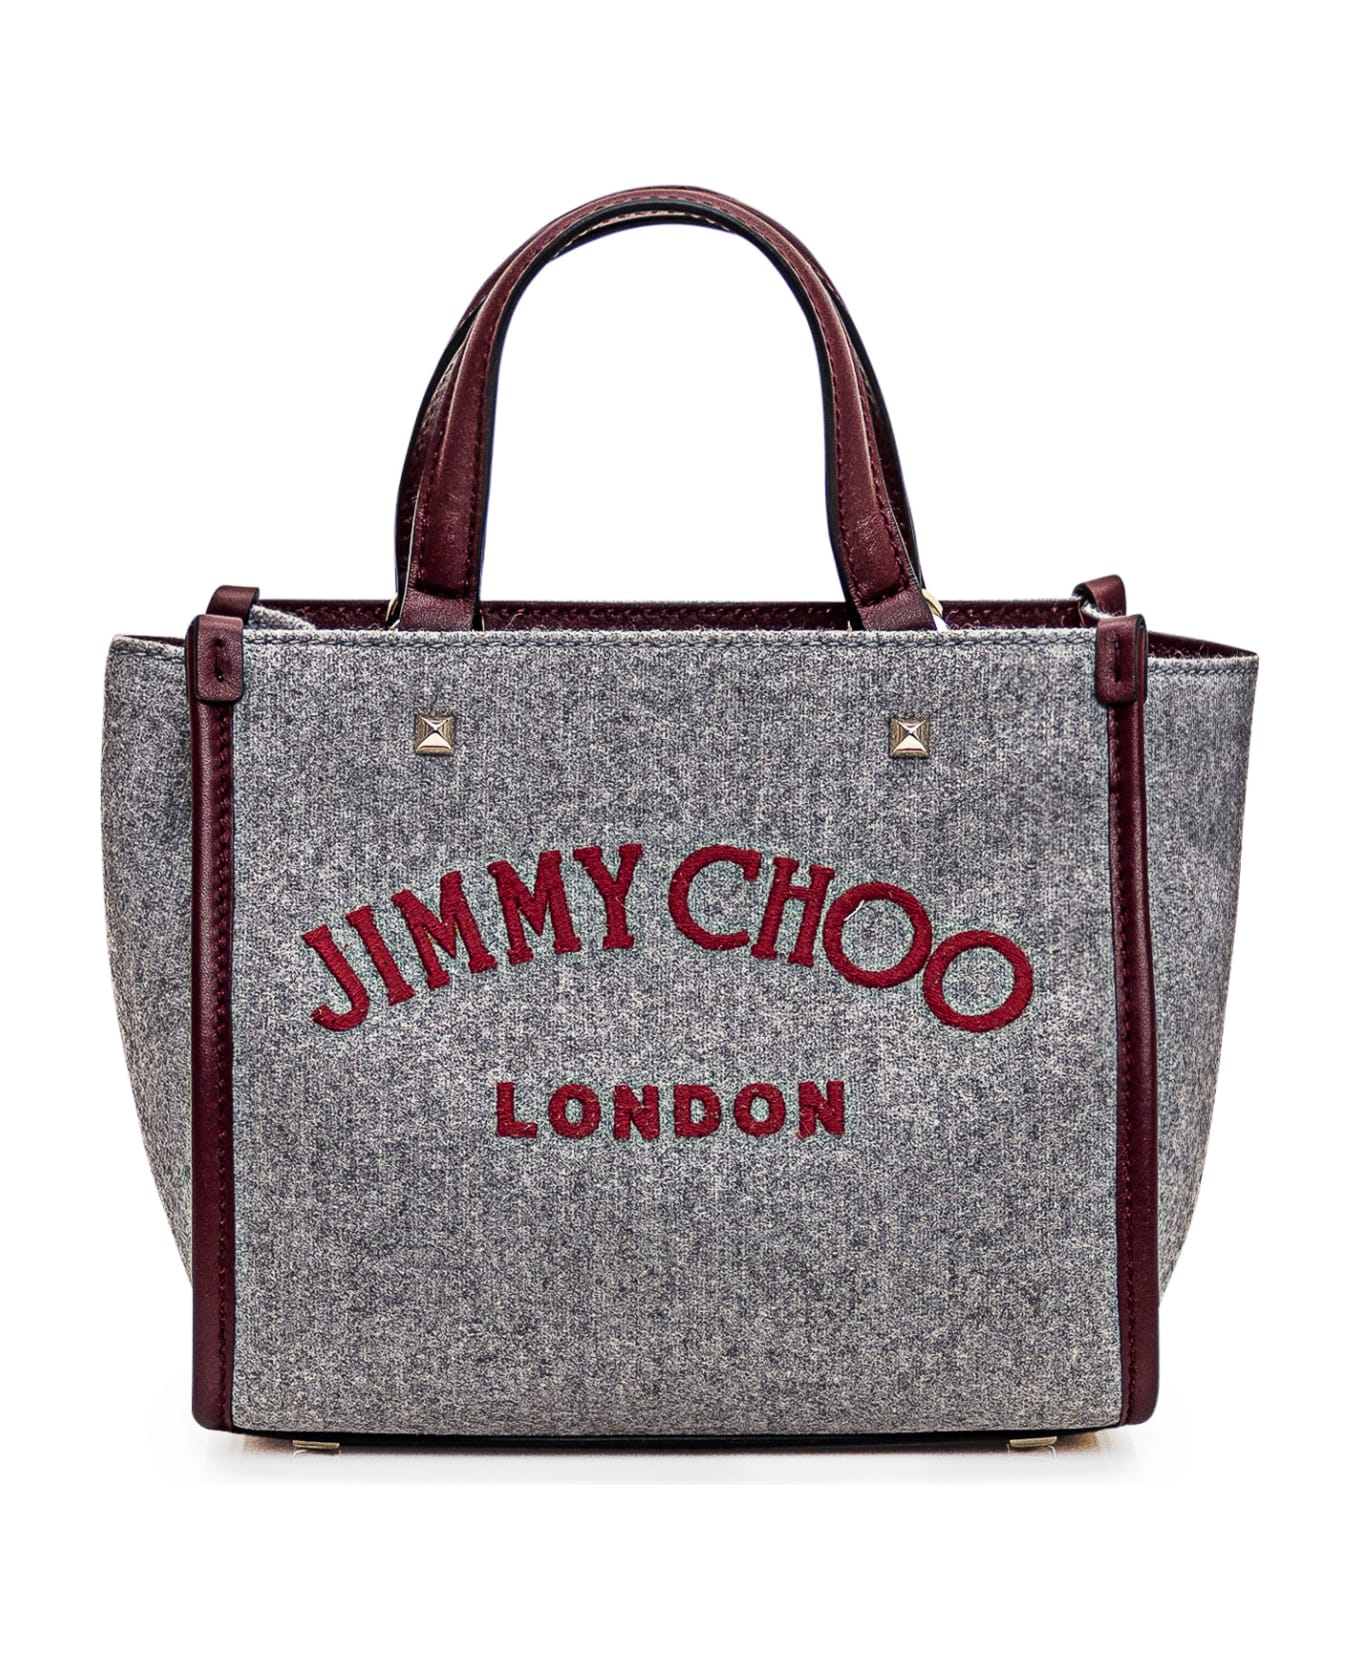 Jimmy Choo Tote S Bag - MARLGREY/BURGUNDY/LIGHTGOLD